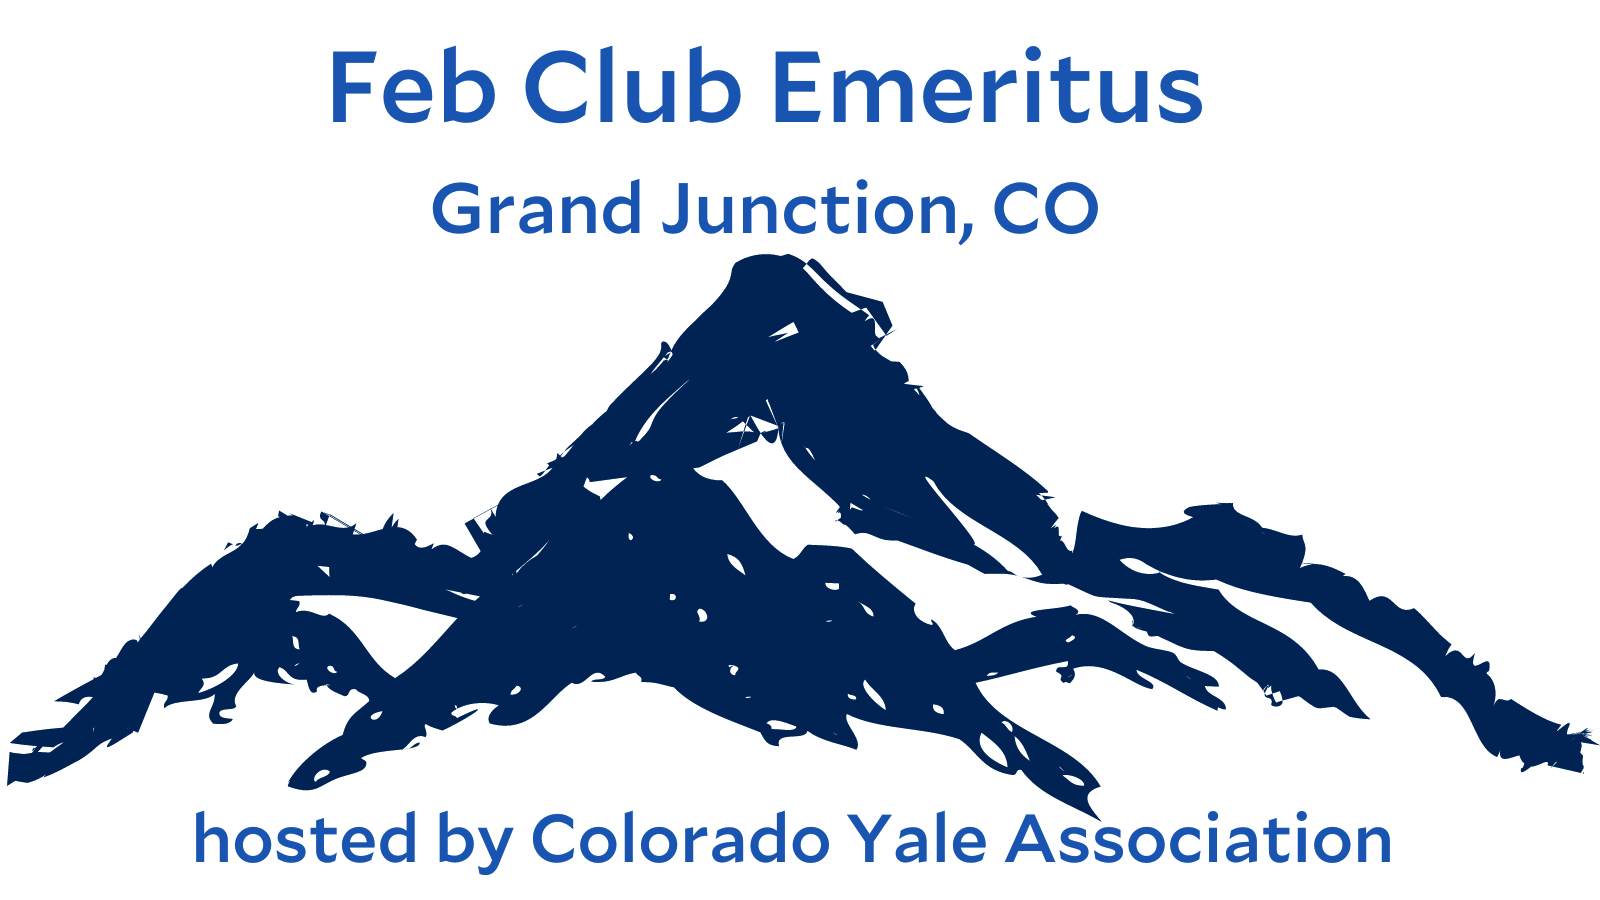 Feb Club Emeritus Grand Junction, CO